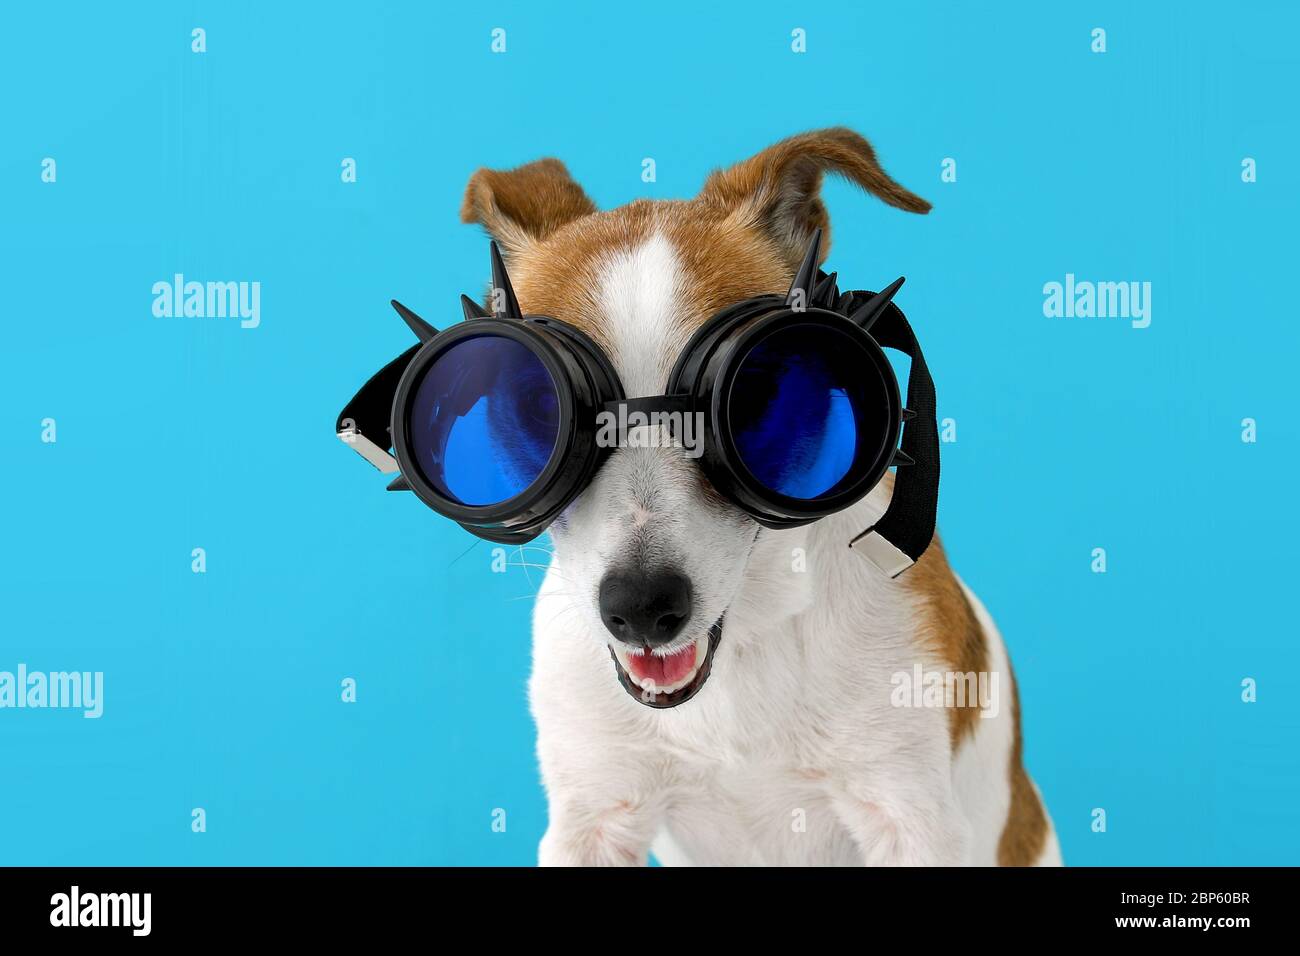 Fantasy cyberpunk dog glasses Stock Photo